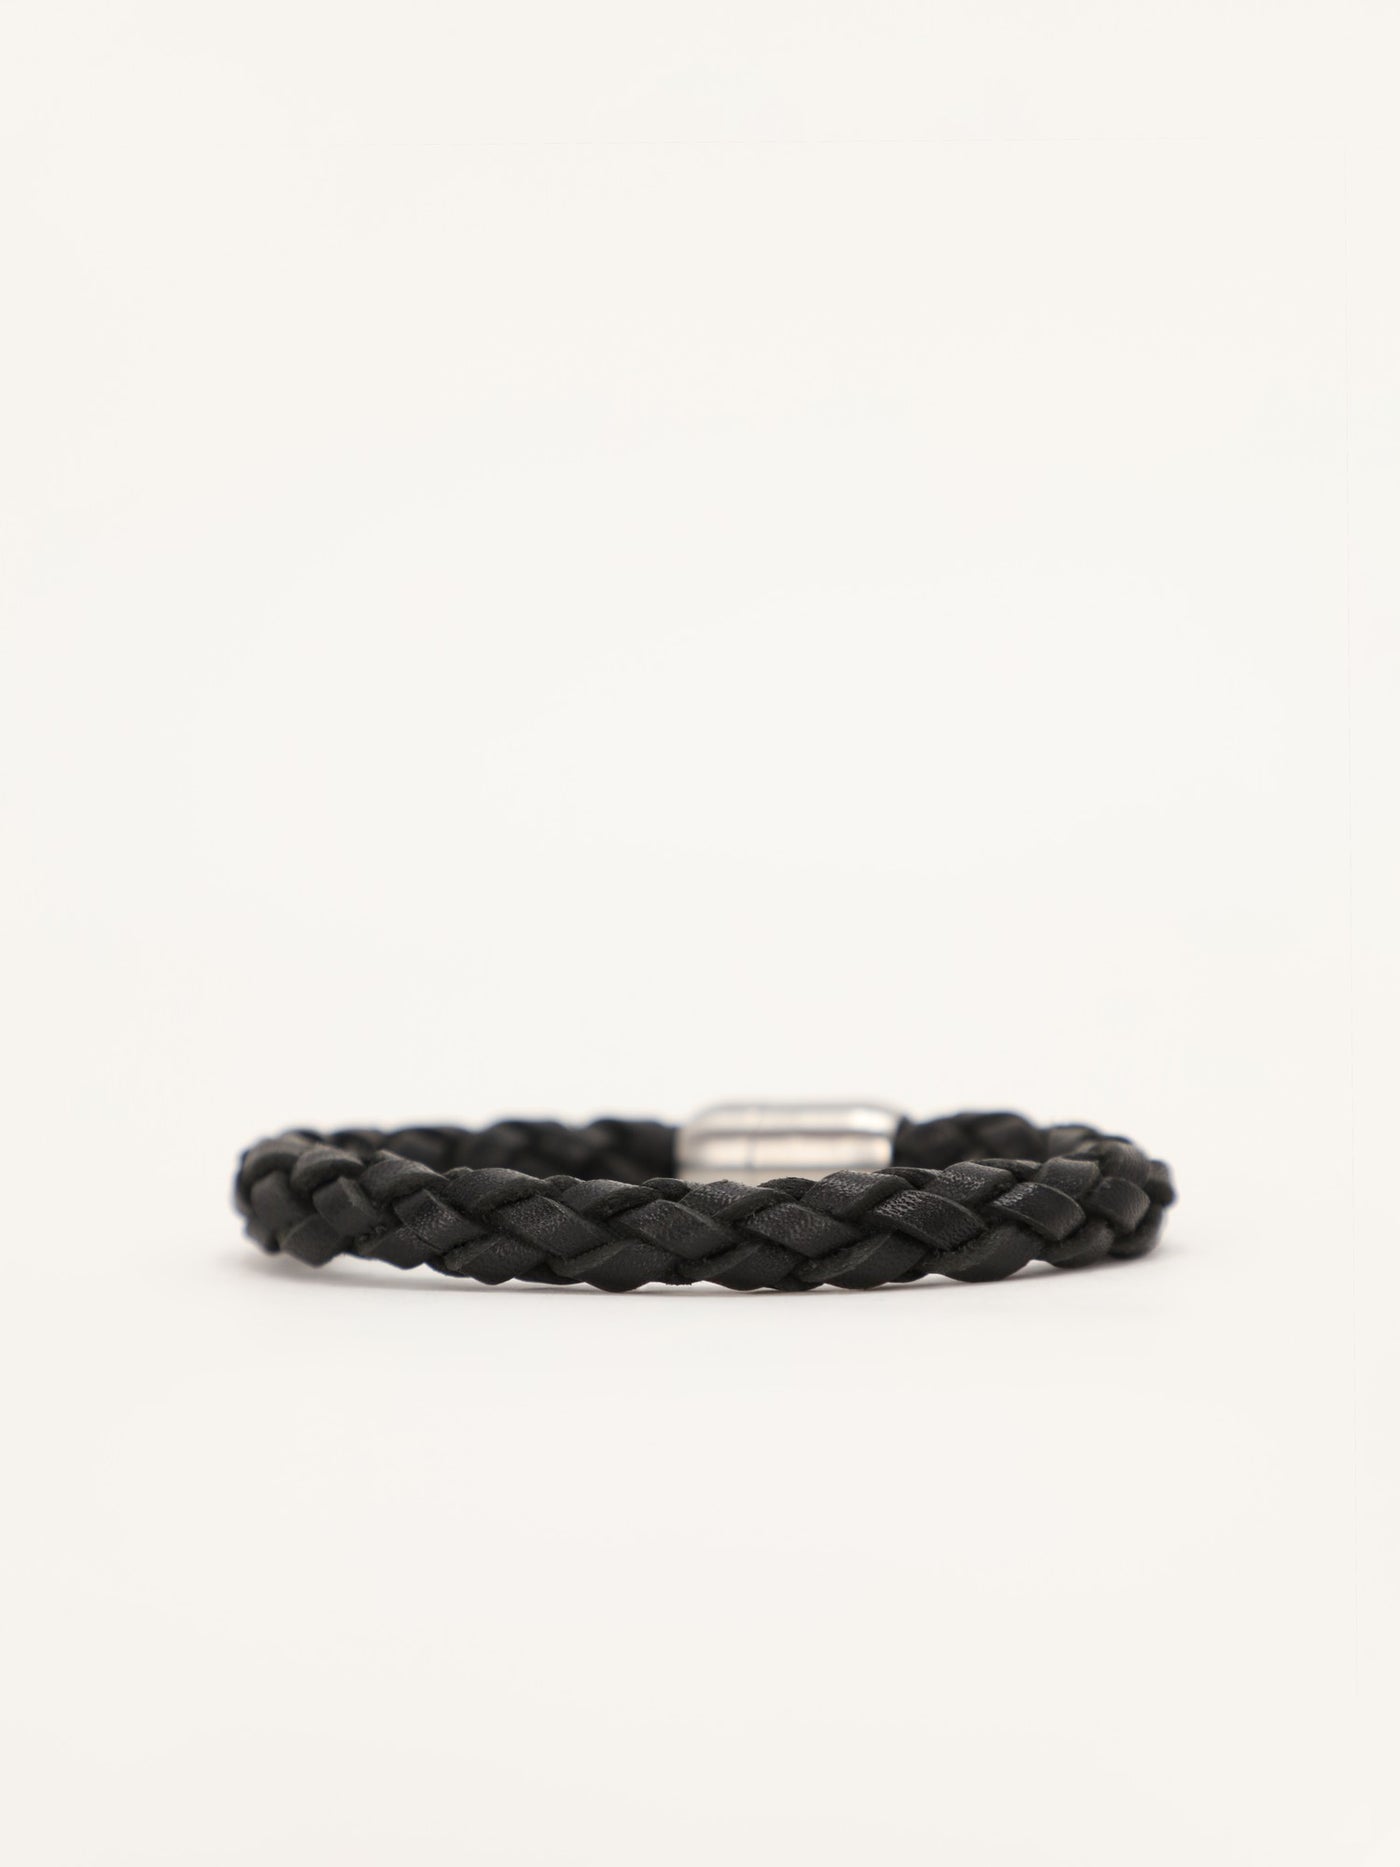 Round Braided Leather Bracelet